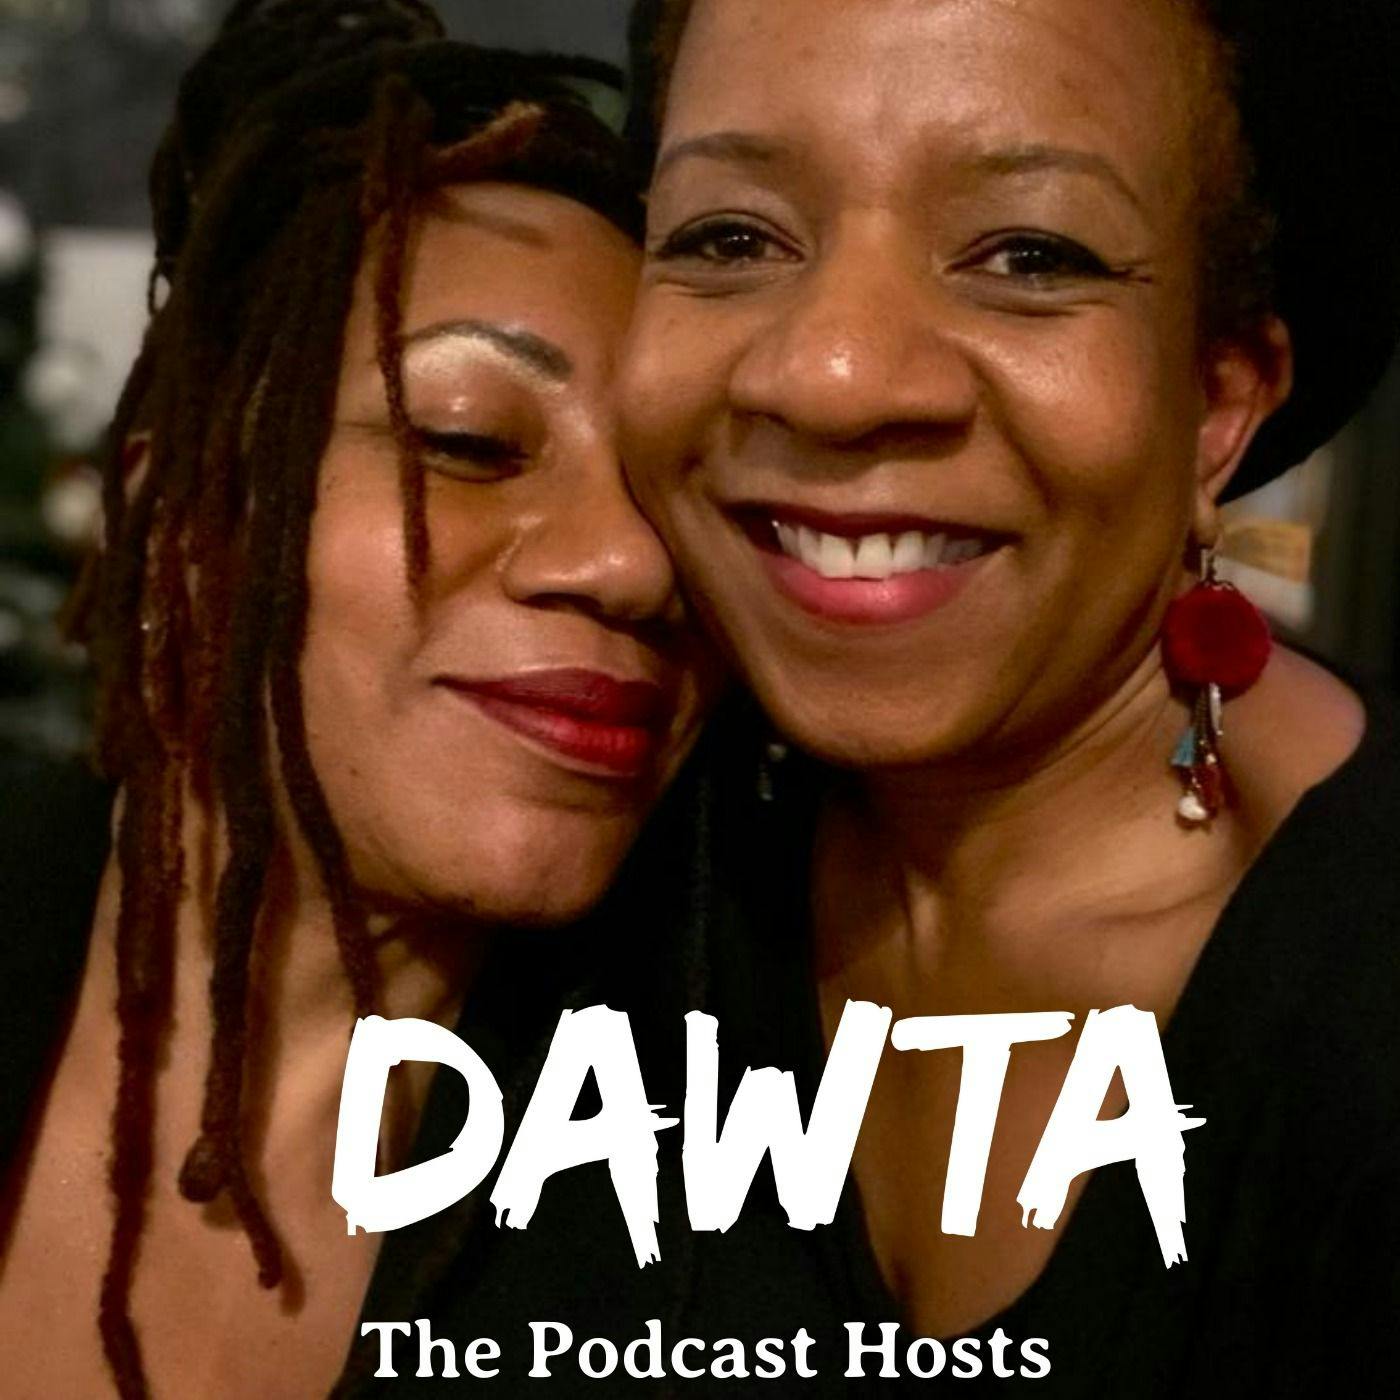 DAWTA The Podcast